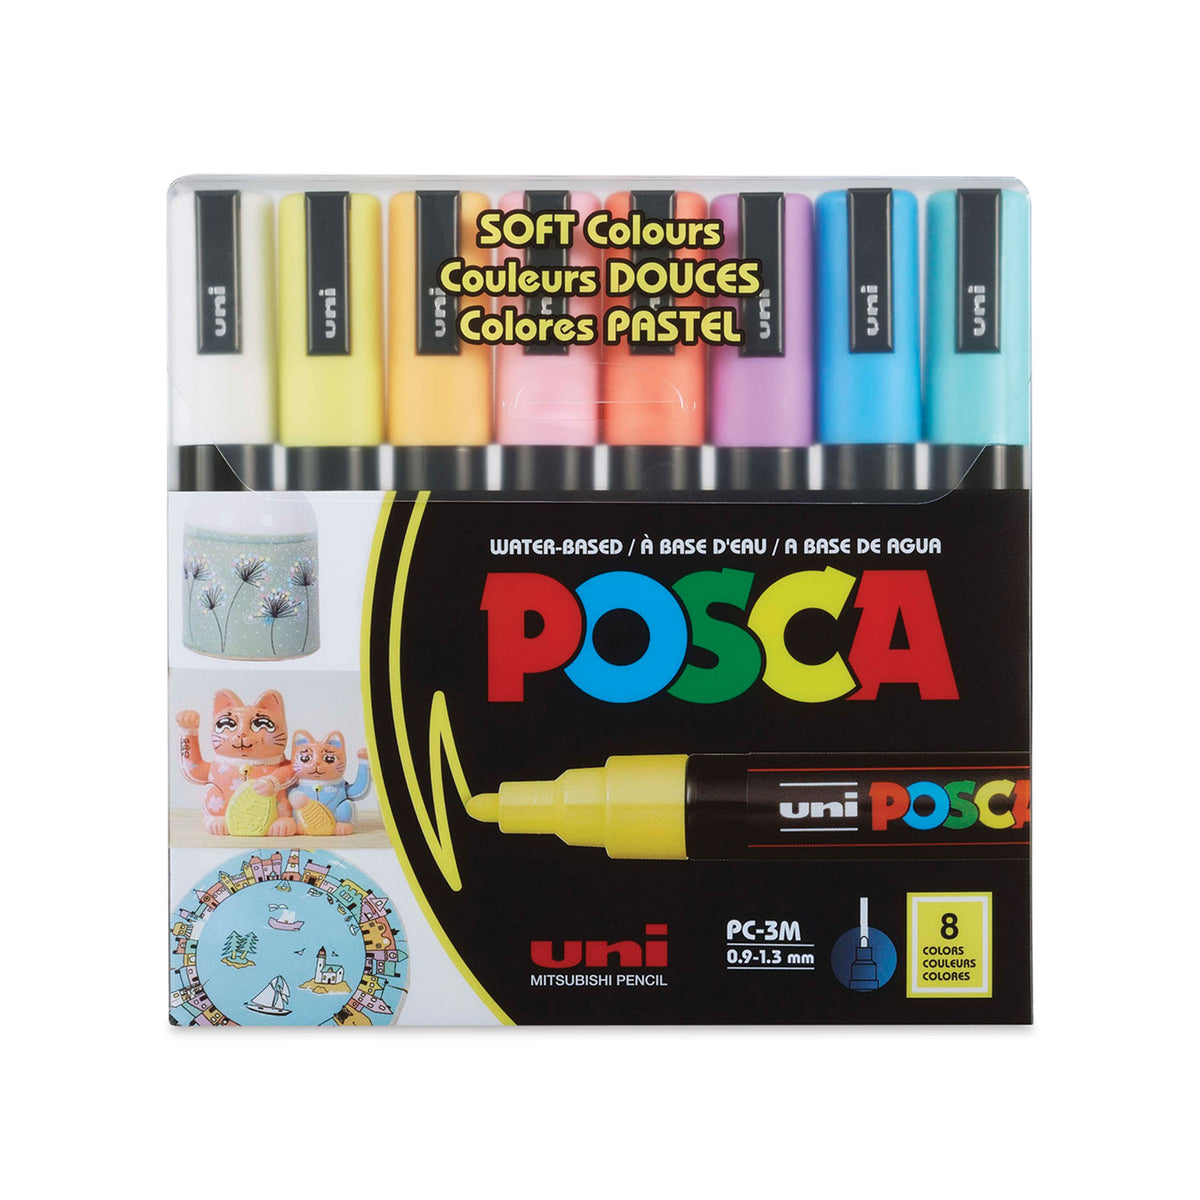 24 Posca Paint Markers, 3M Fine Posca Markers with Algeria